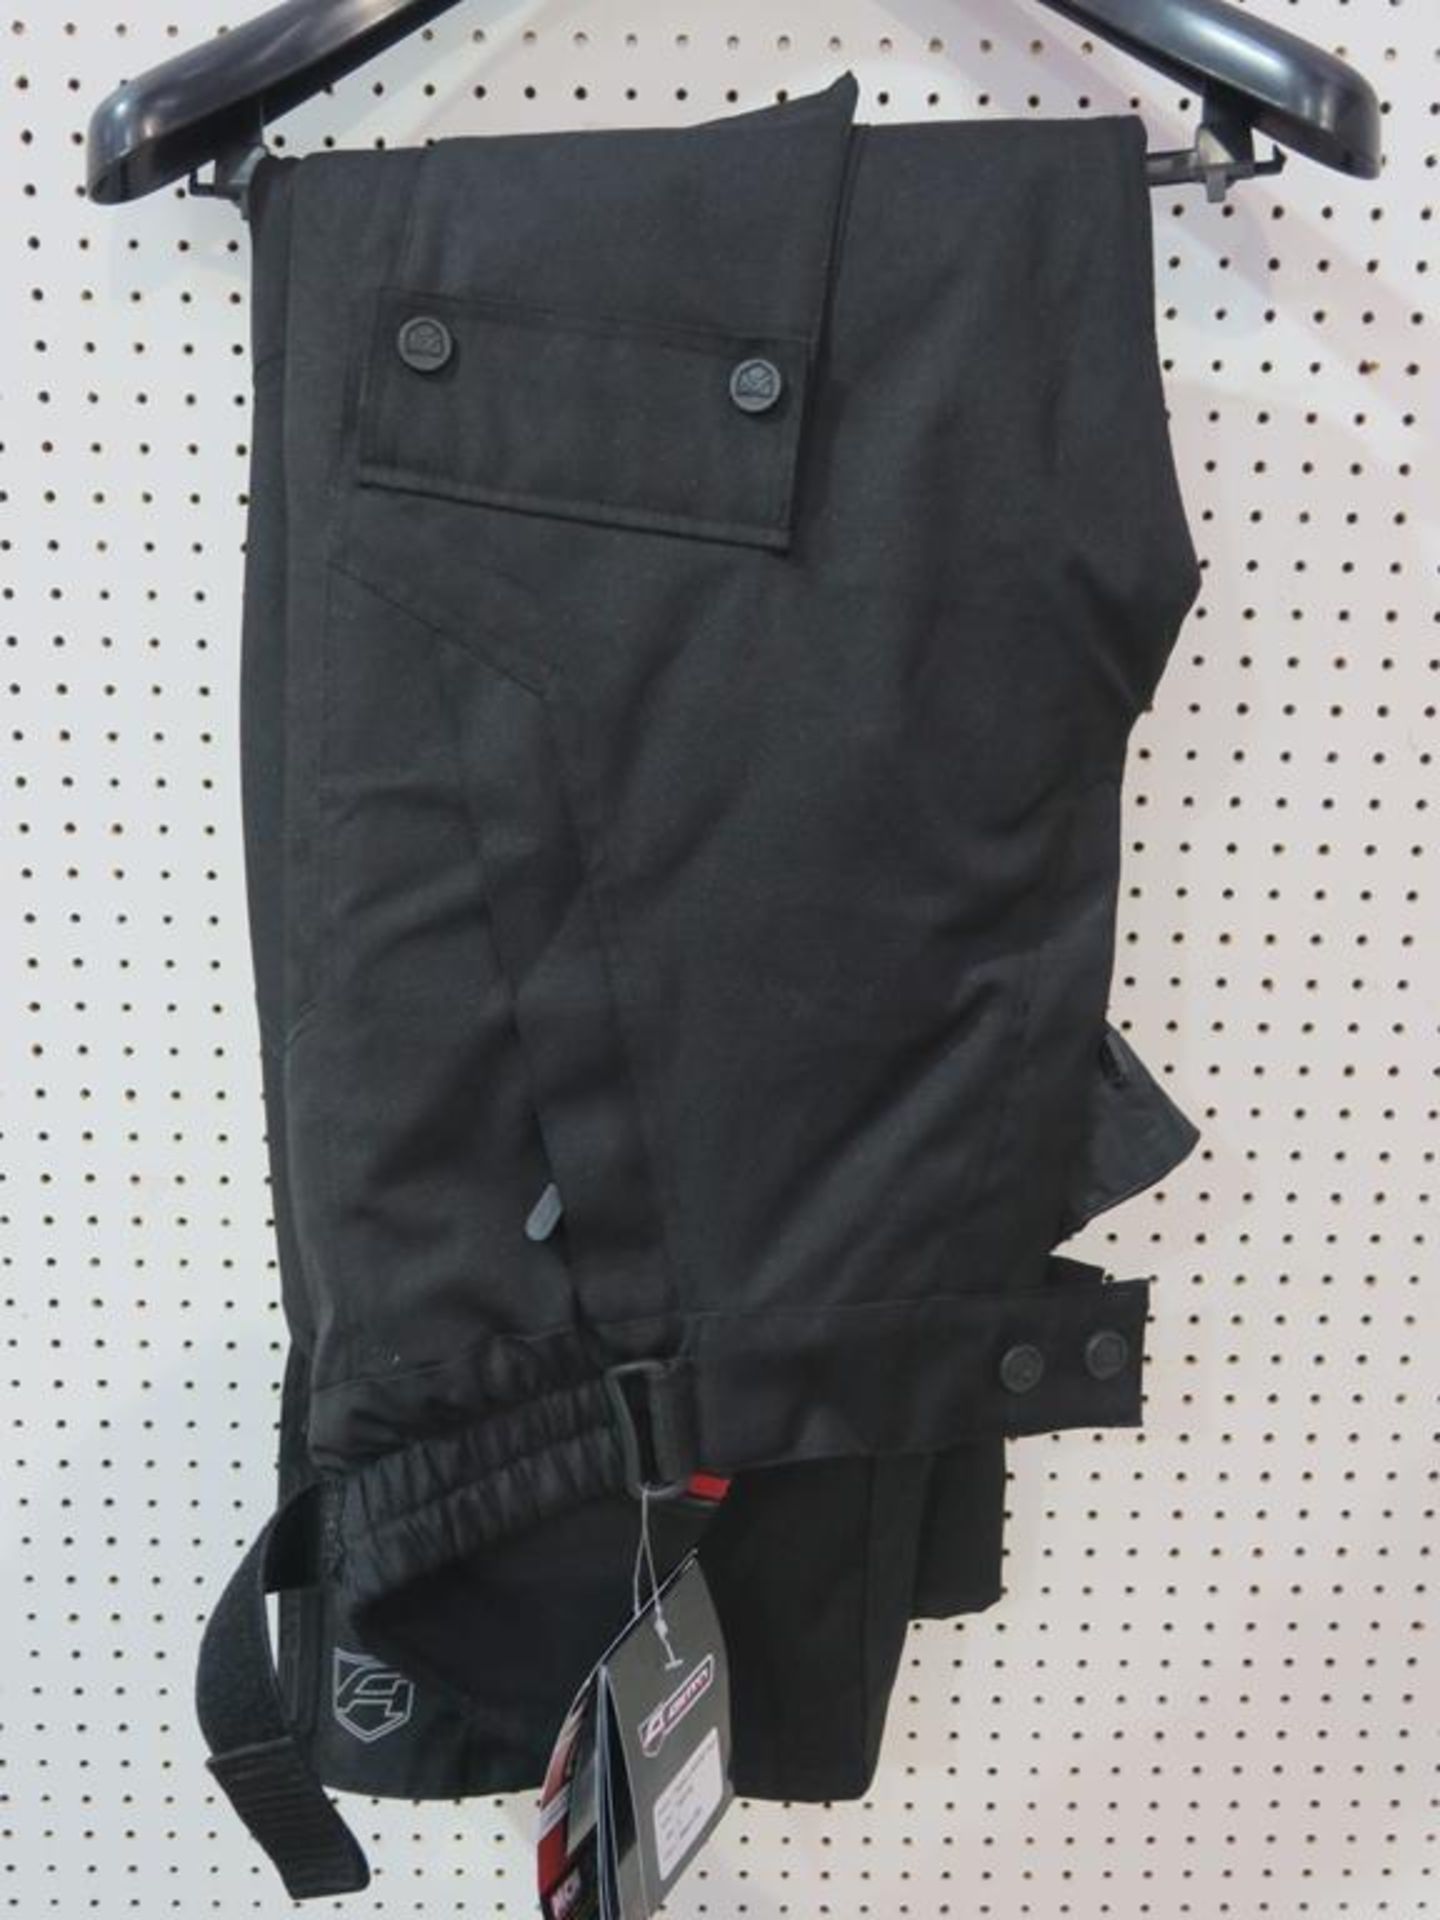 * Akito Python Sport Pants Black size L 183130L00 (RRP £70)